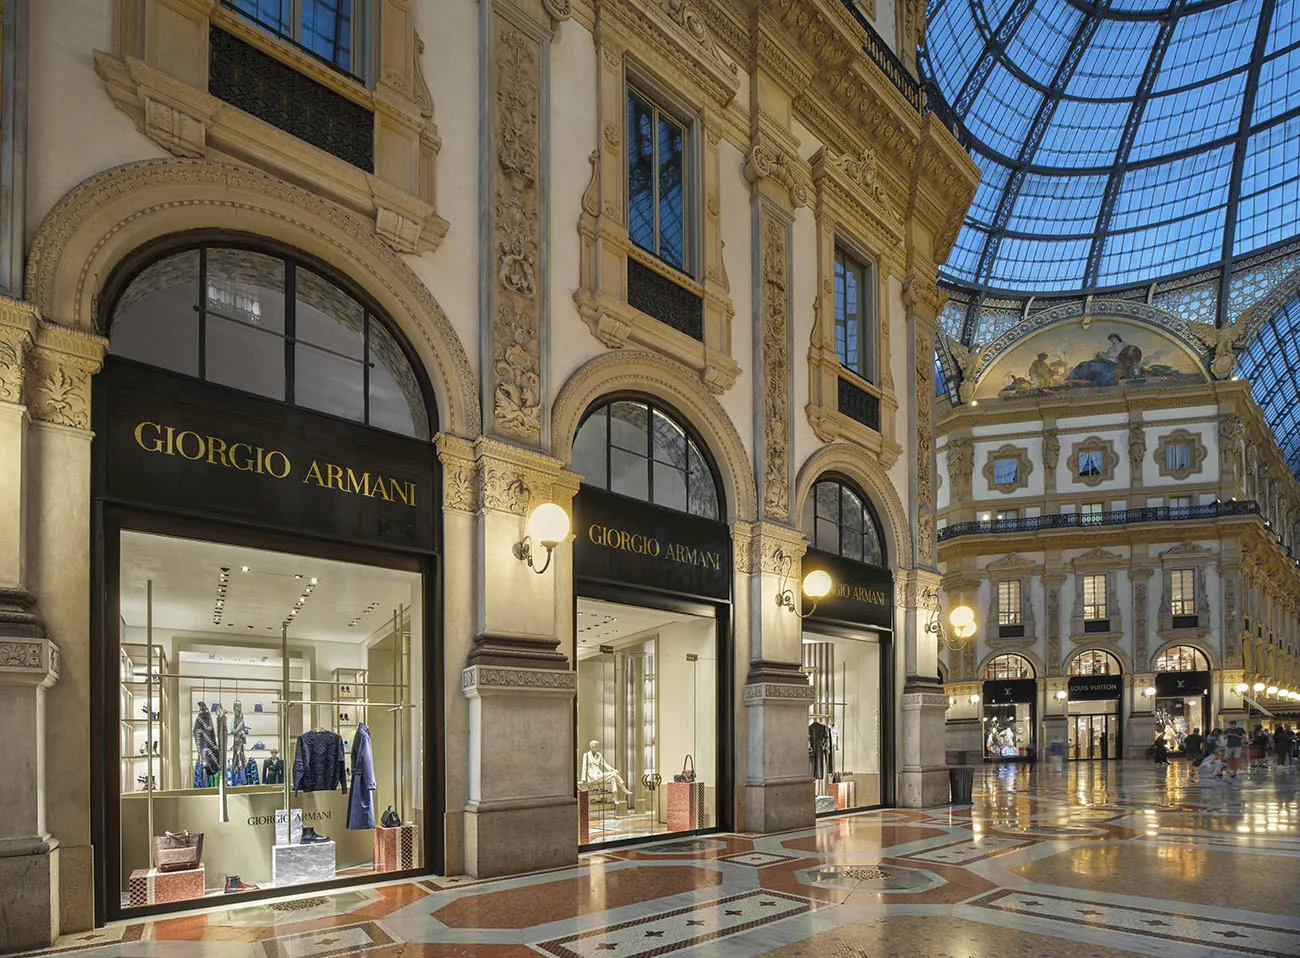 Giorgio Armani - Galleria Vittorio Emanuele II